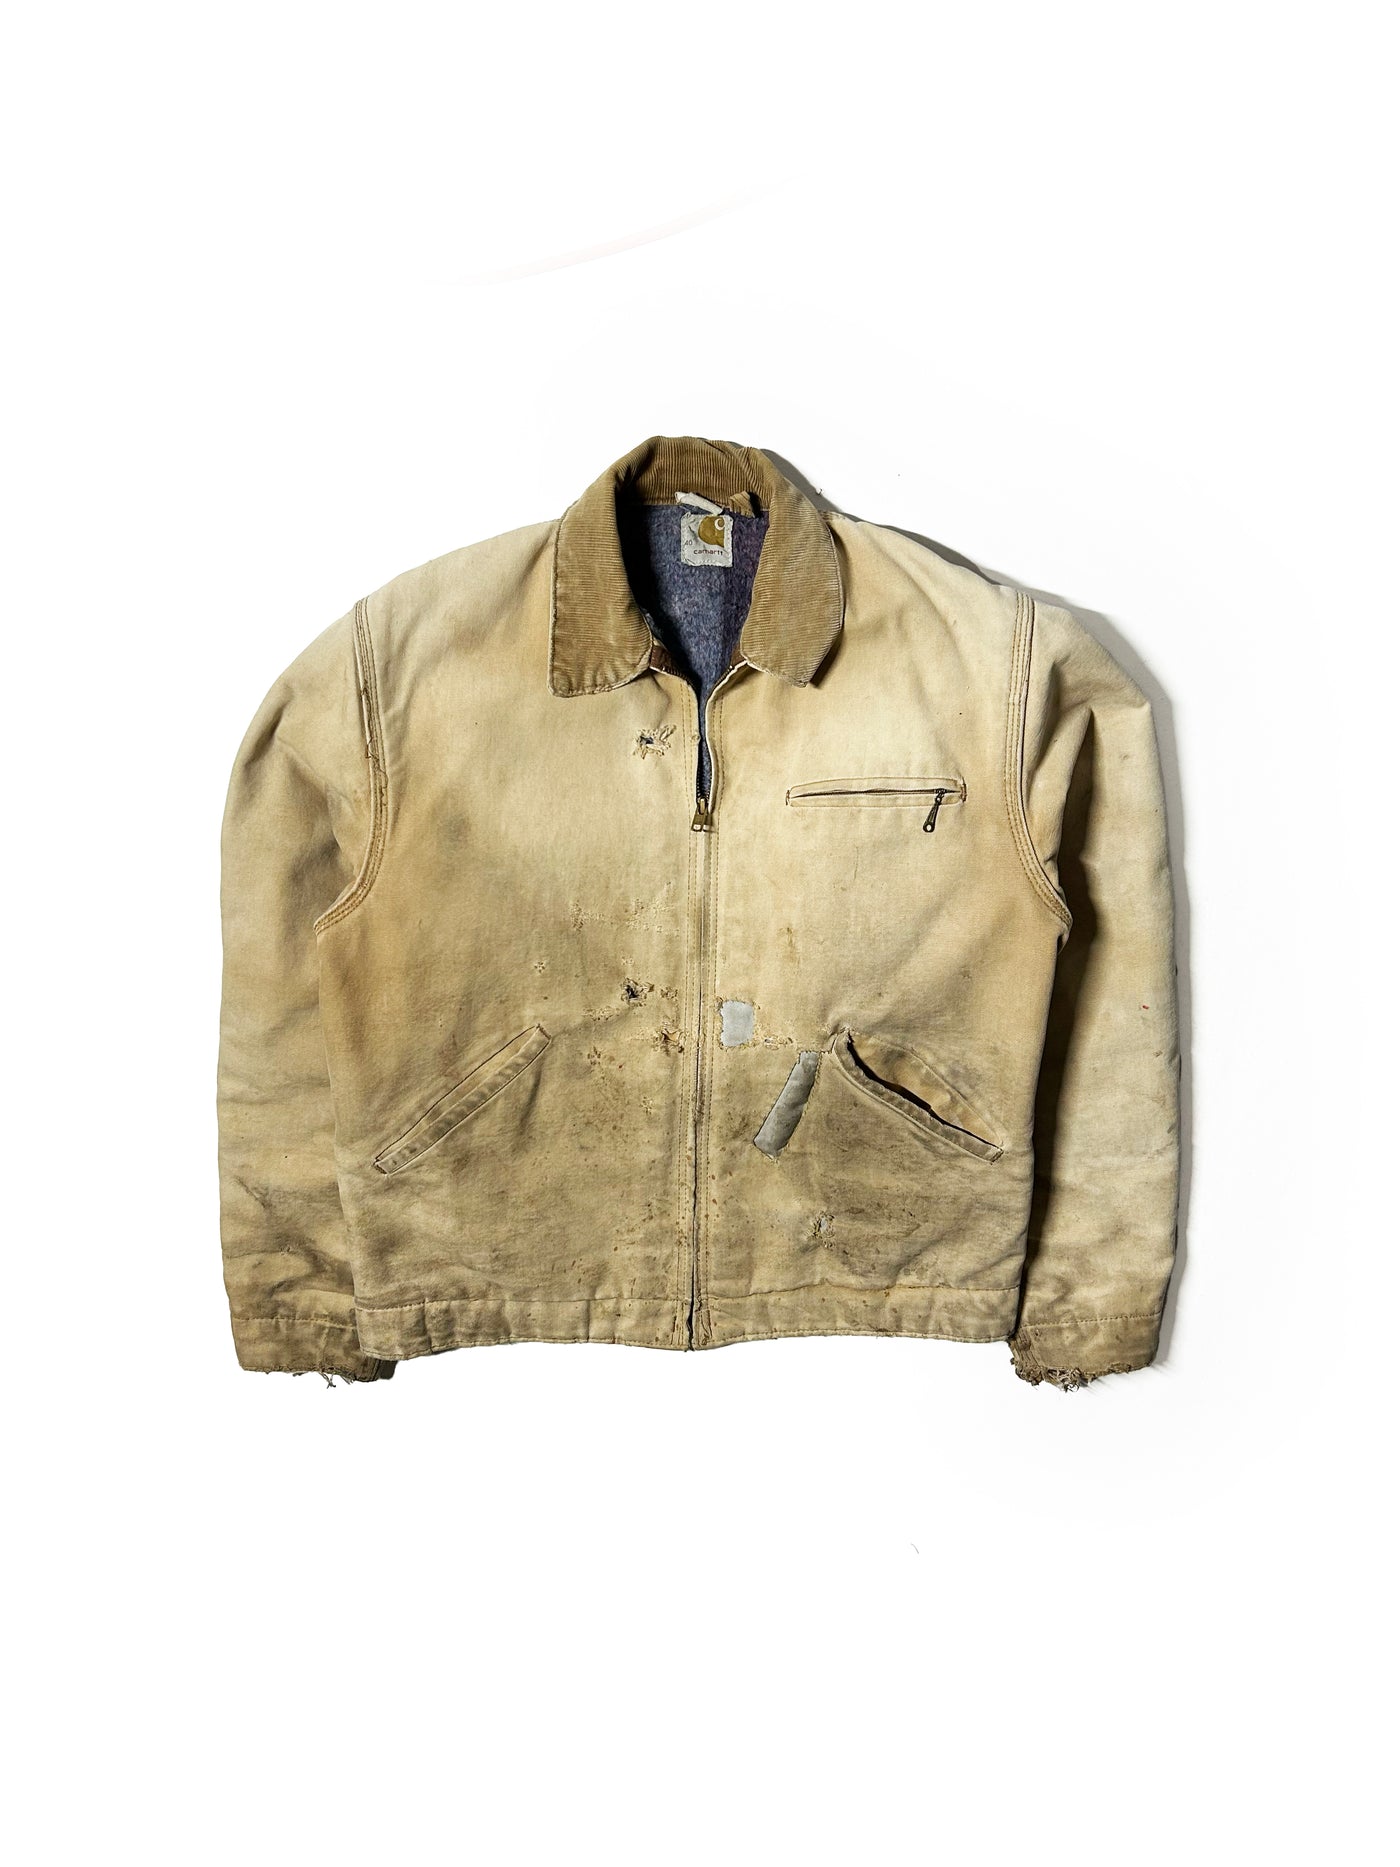 Vintage 80s Carhartt Detroit Style Distressed Tan Jacket